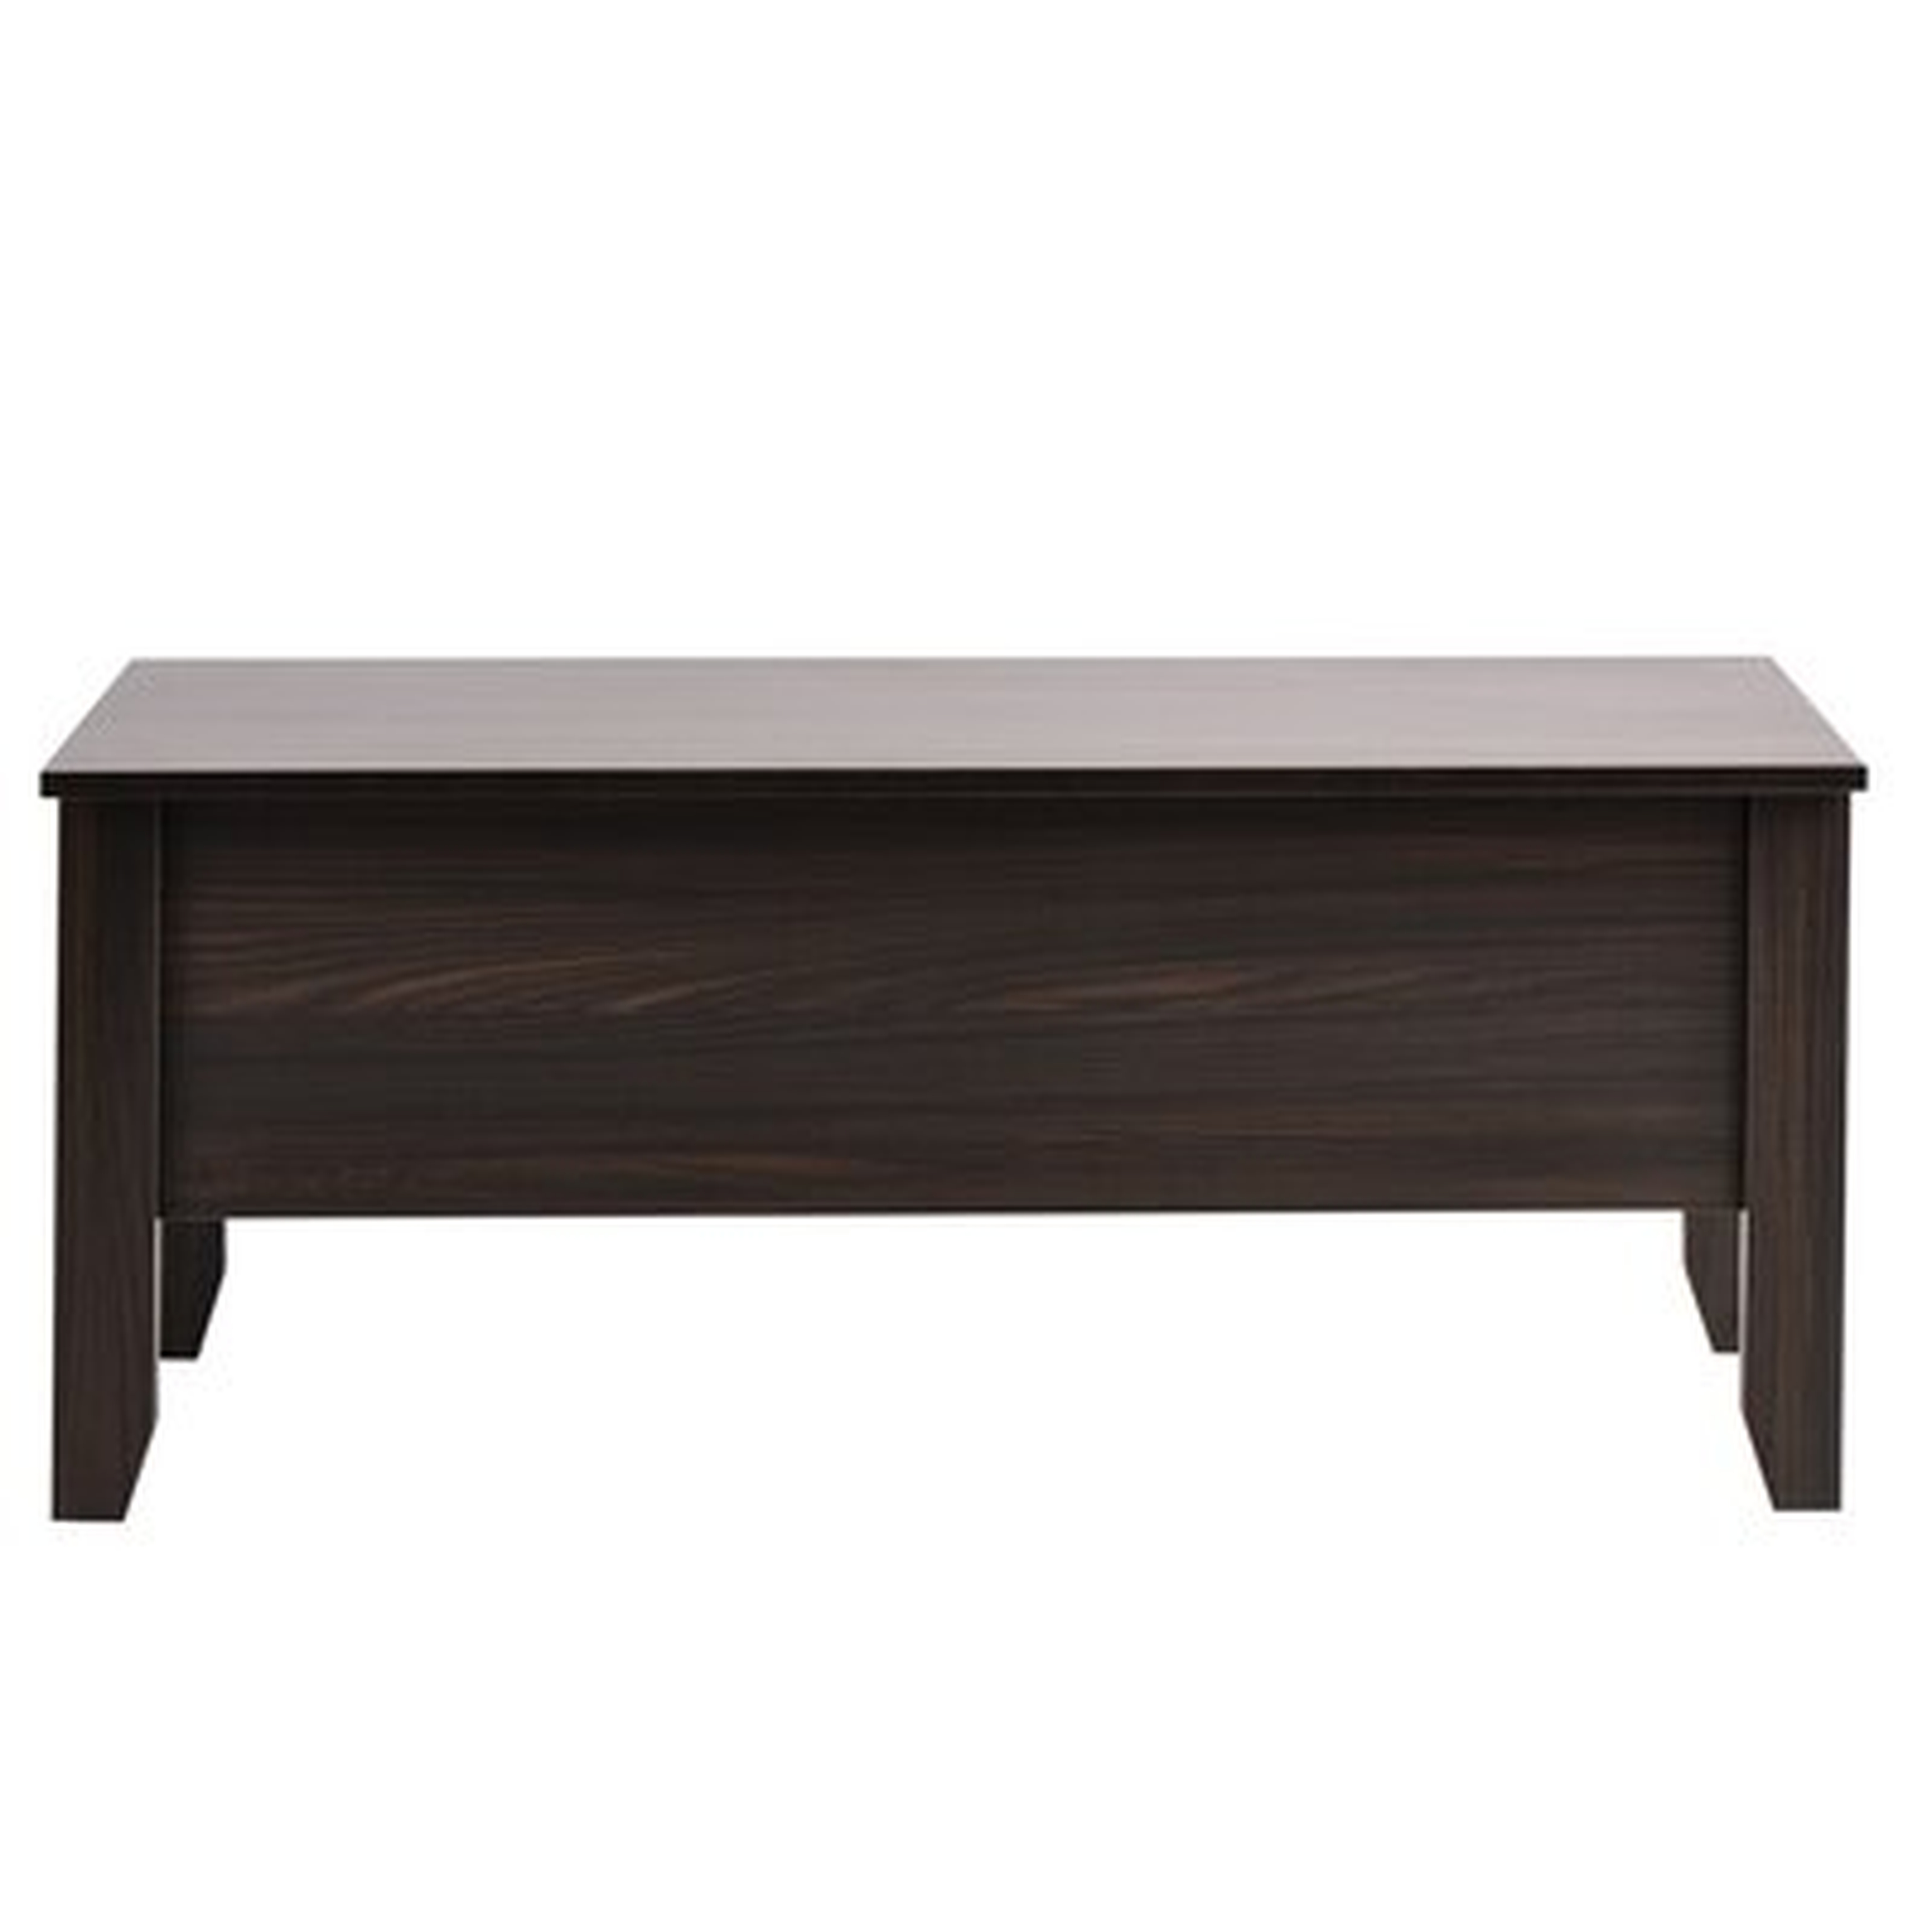 Modern Lift-Top Coffee Table With Storage, Sofa Table - Wayfair